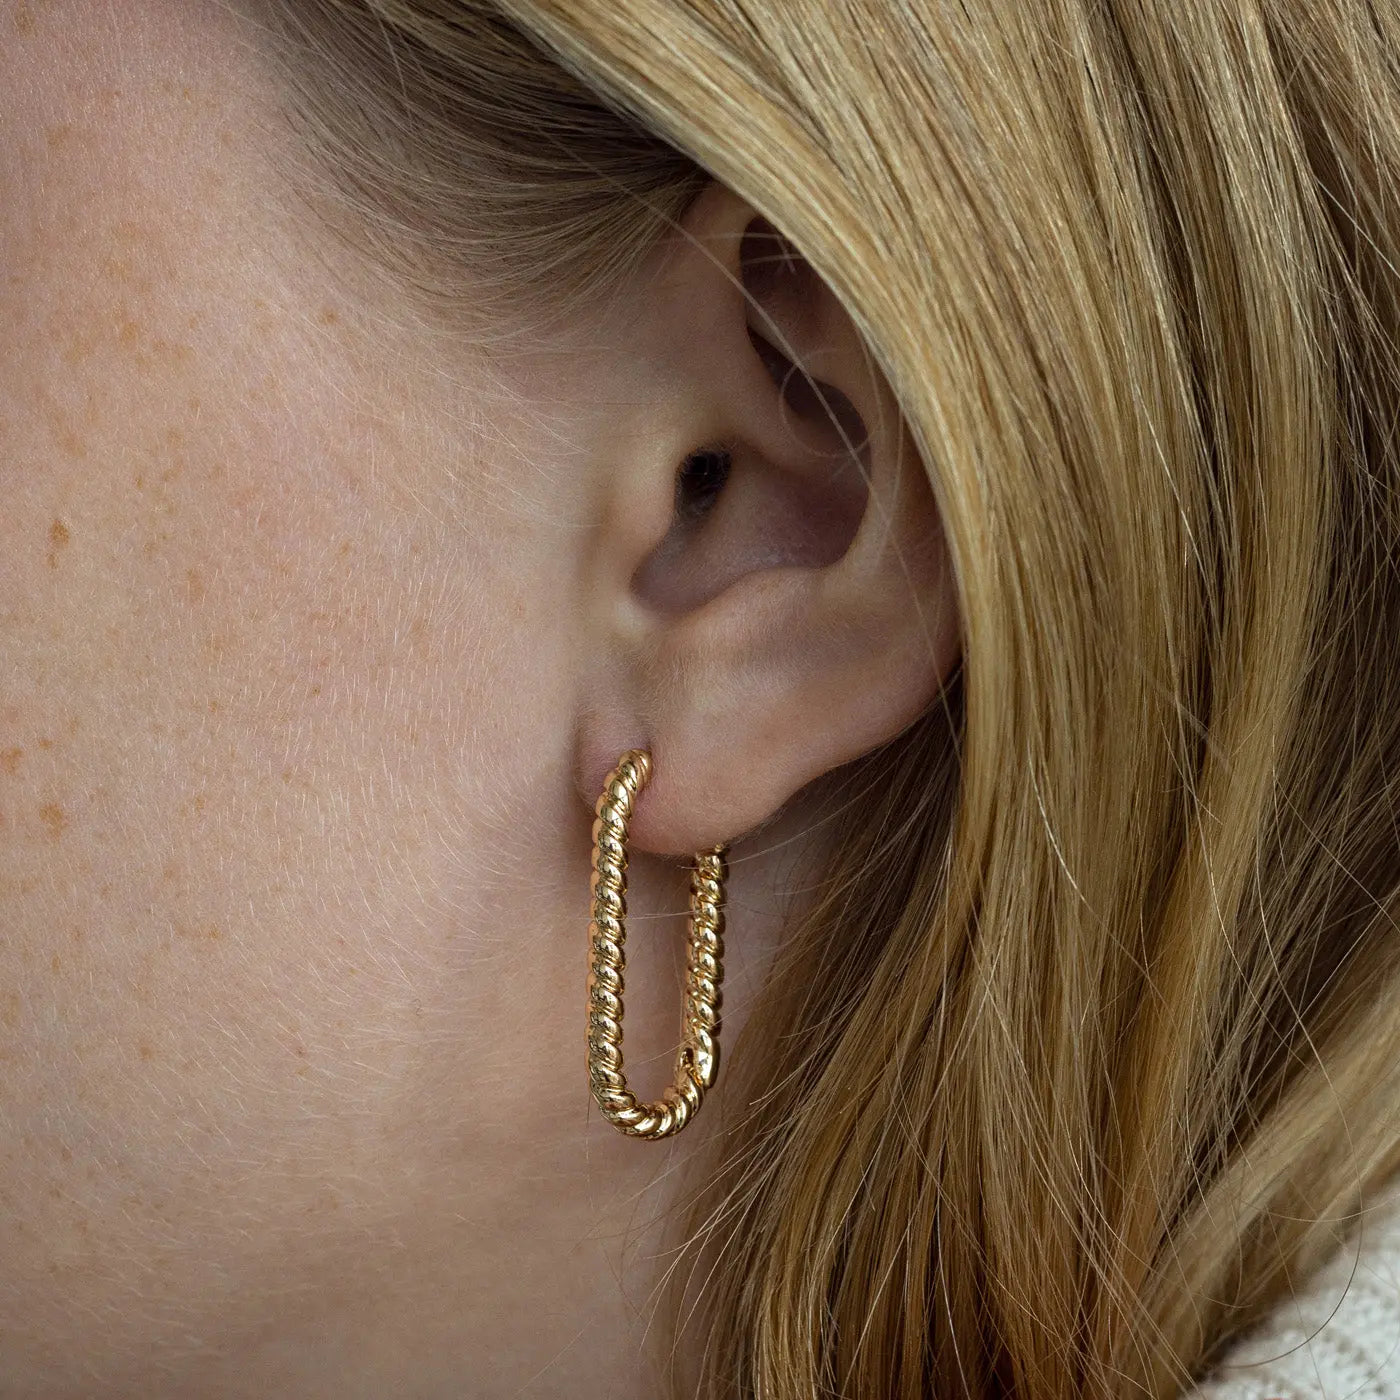 Oval Twisted Earring Hoop - Gold